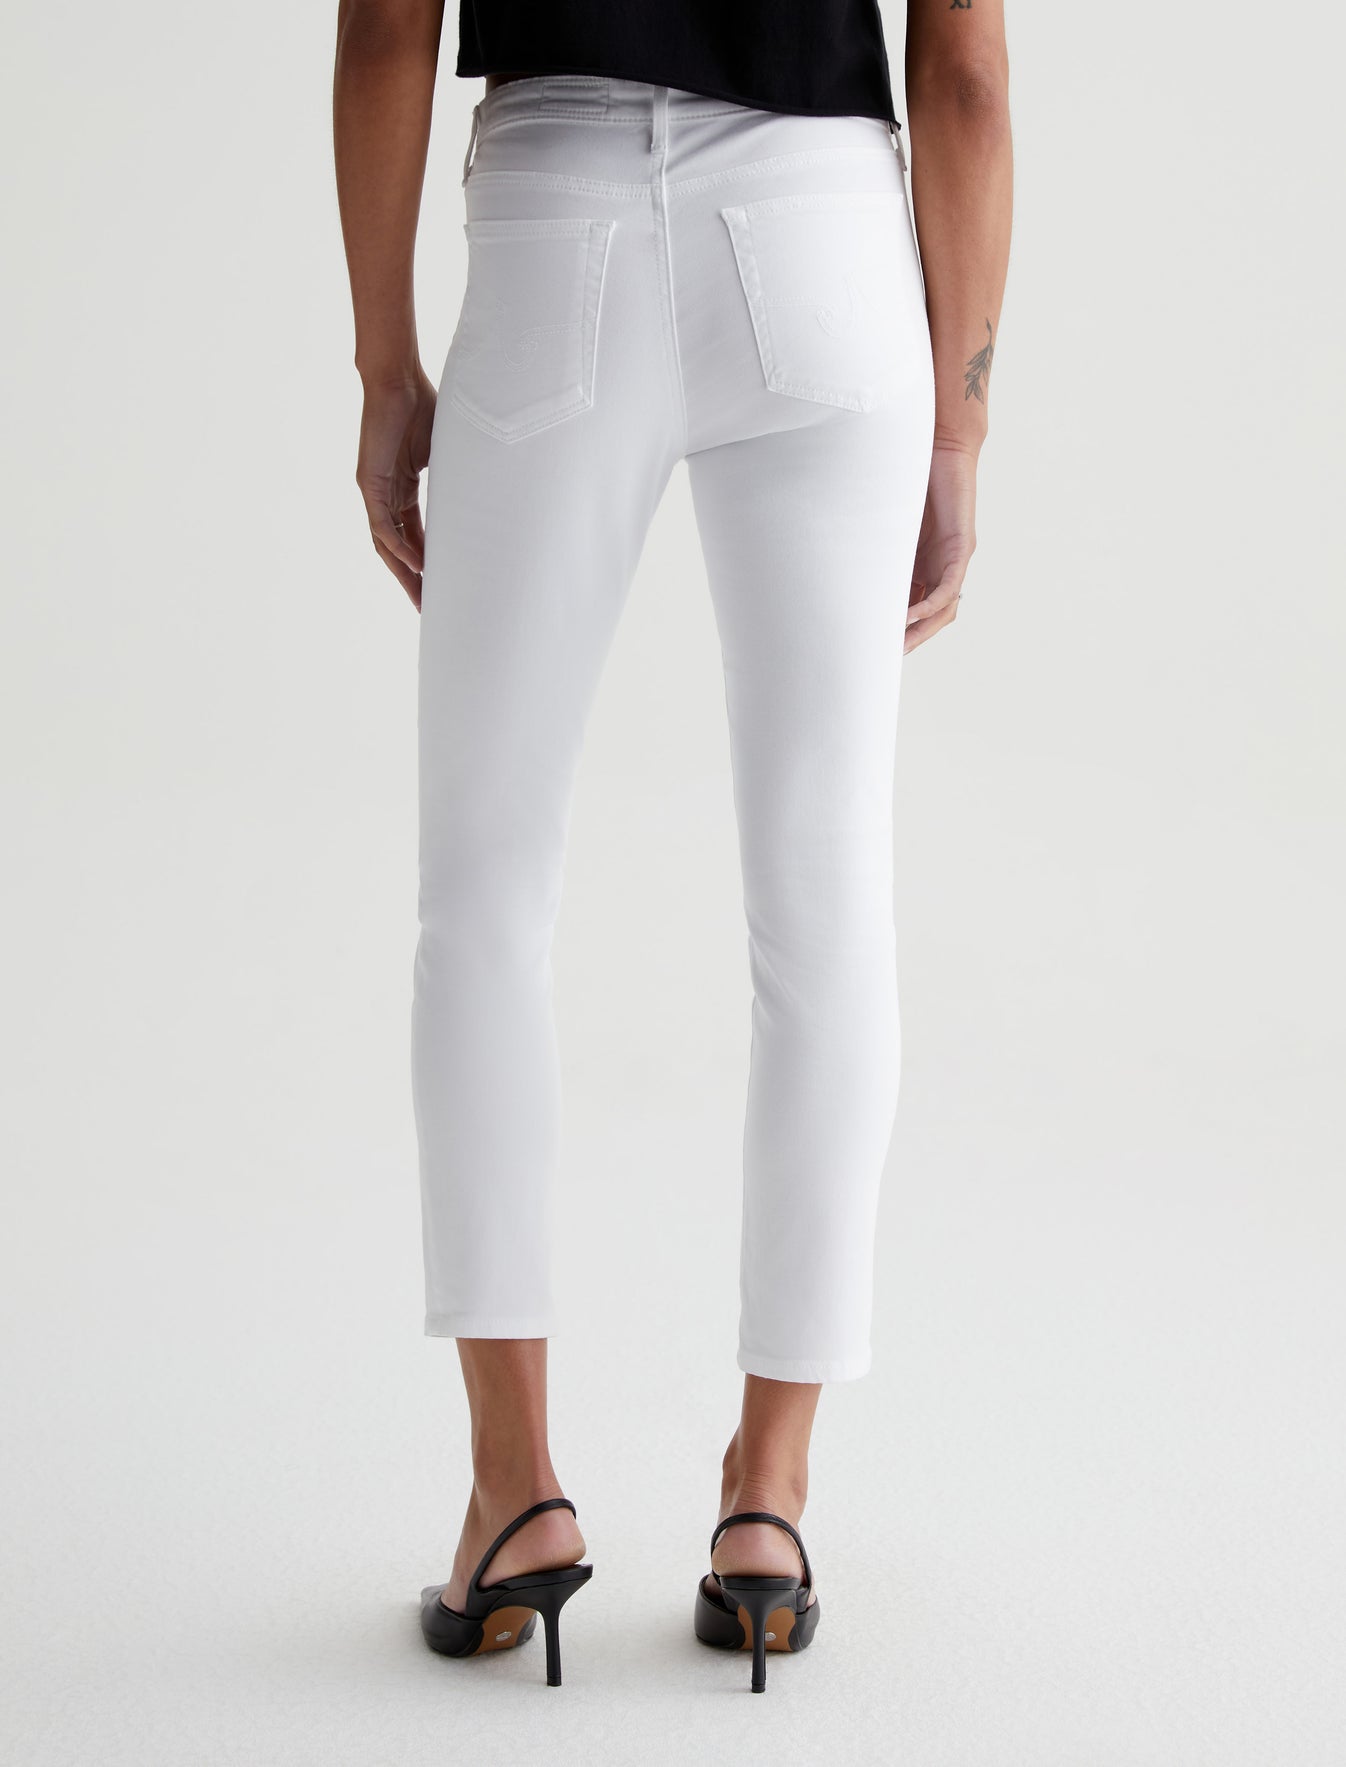 AG Prima Crop White - Premium Denim Pant from Marina St Barth - Just $198! Shop now at Marina St Barth